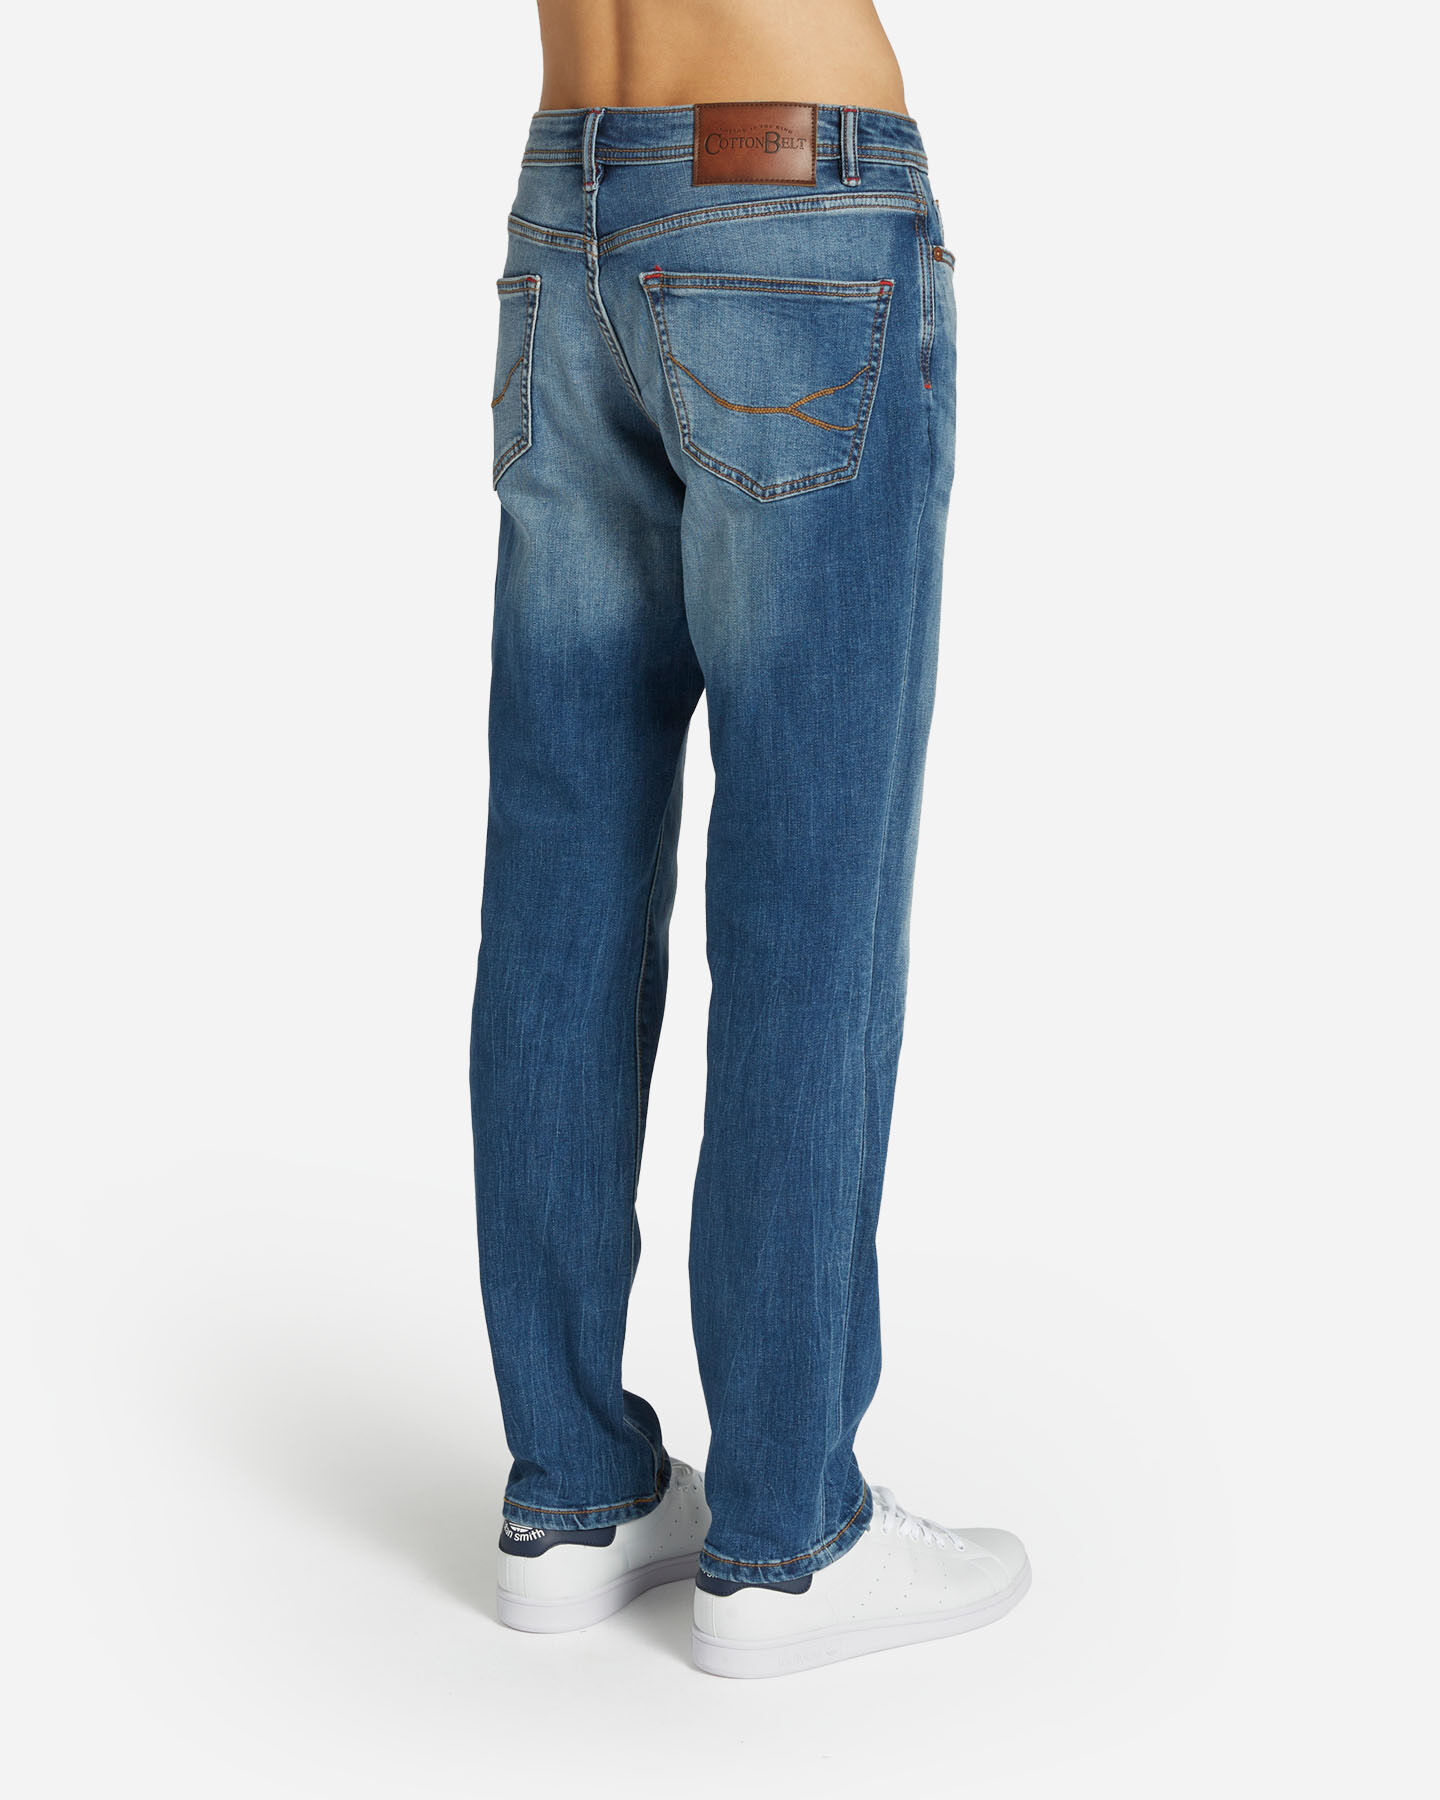  Jeans COTTON BELT 5 POCKET M S4126998|MD|36 scatto 1